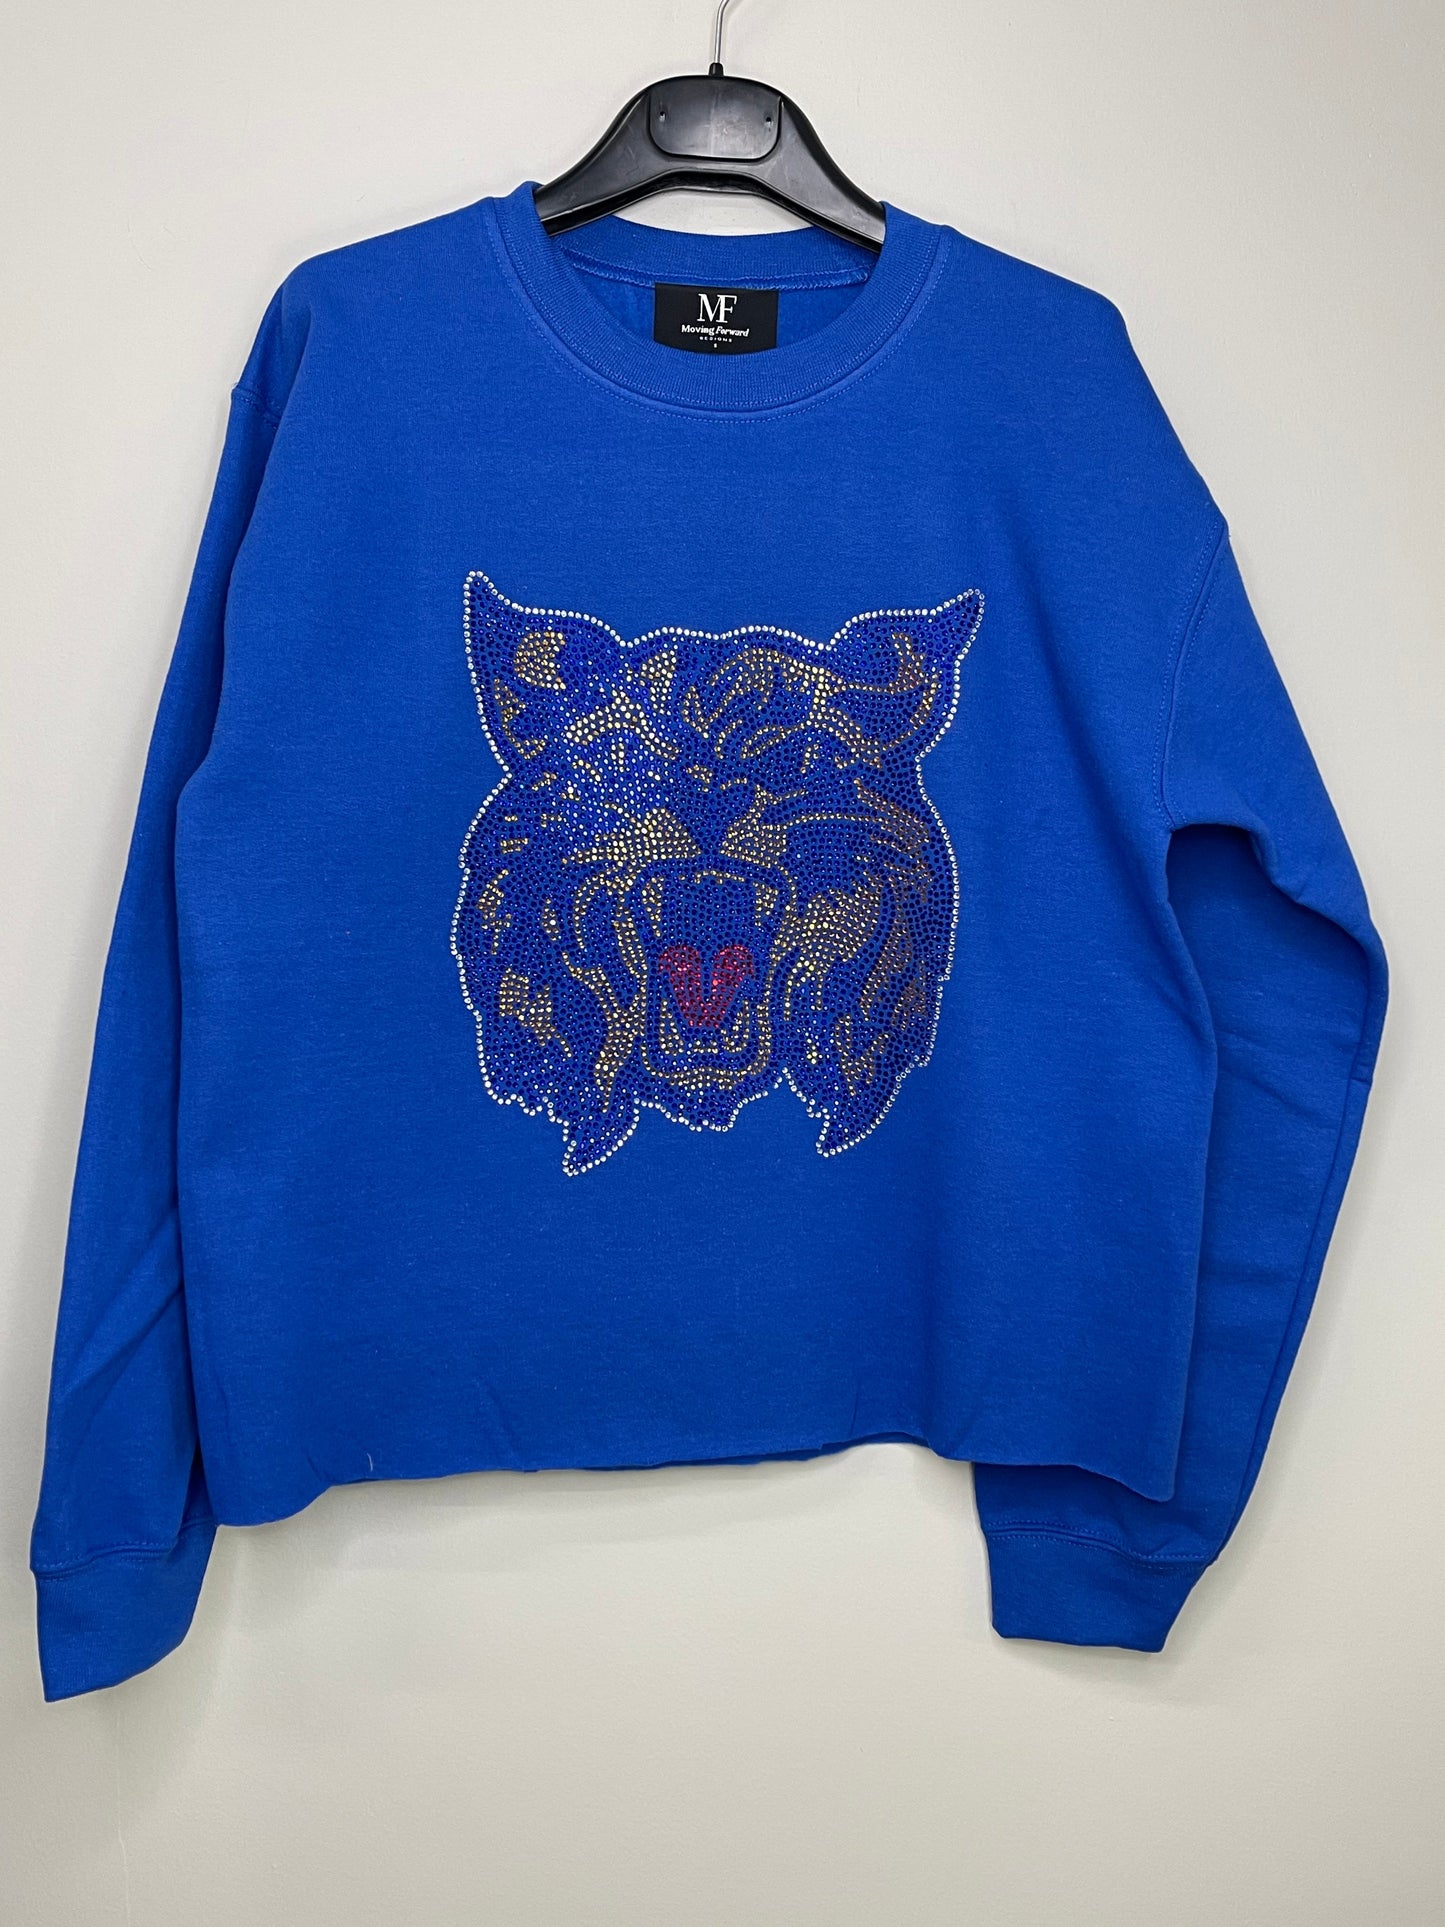 Game Day Sweatshirt, Crewneck Royal Blue, Kentucky Wildcat